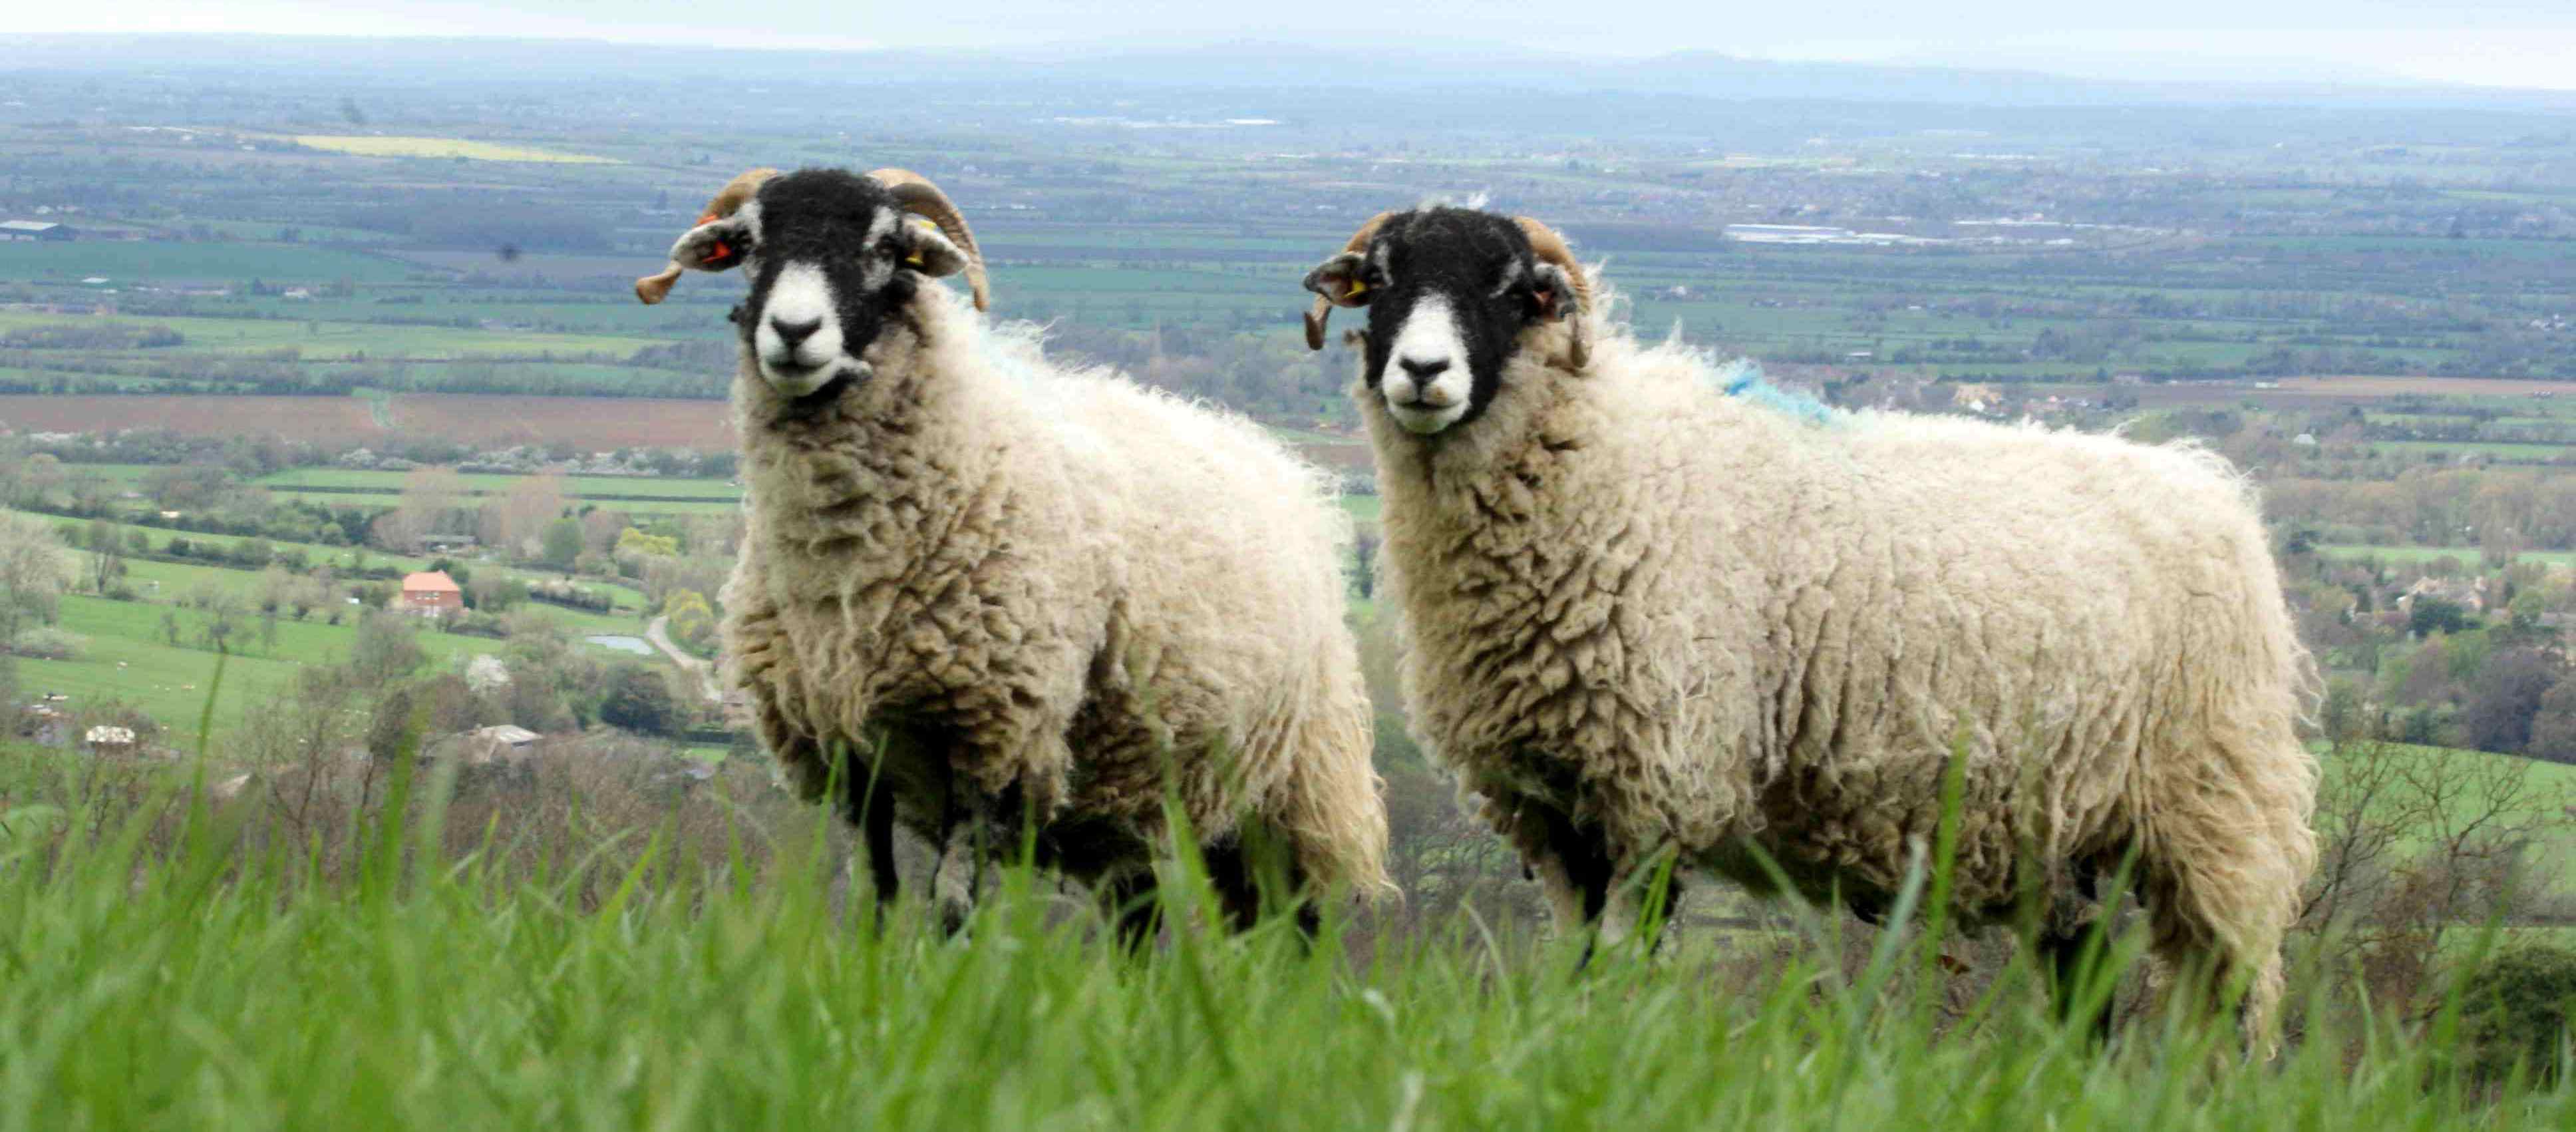 Two sheep photo